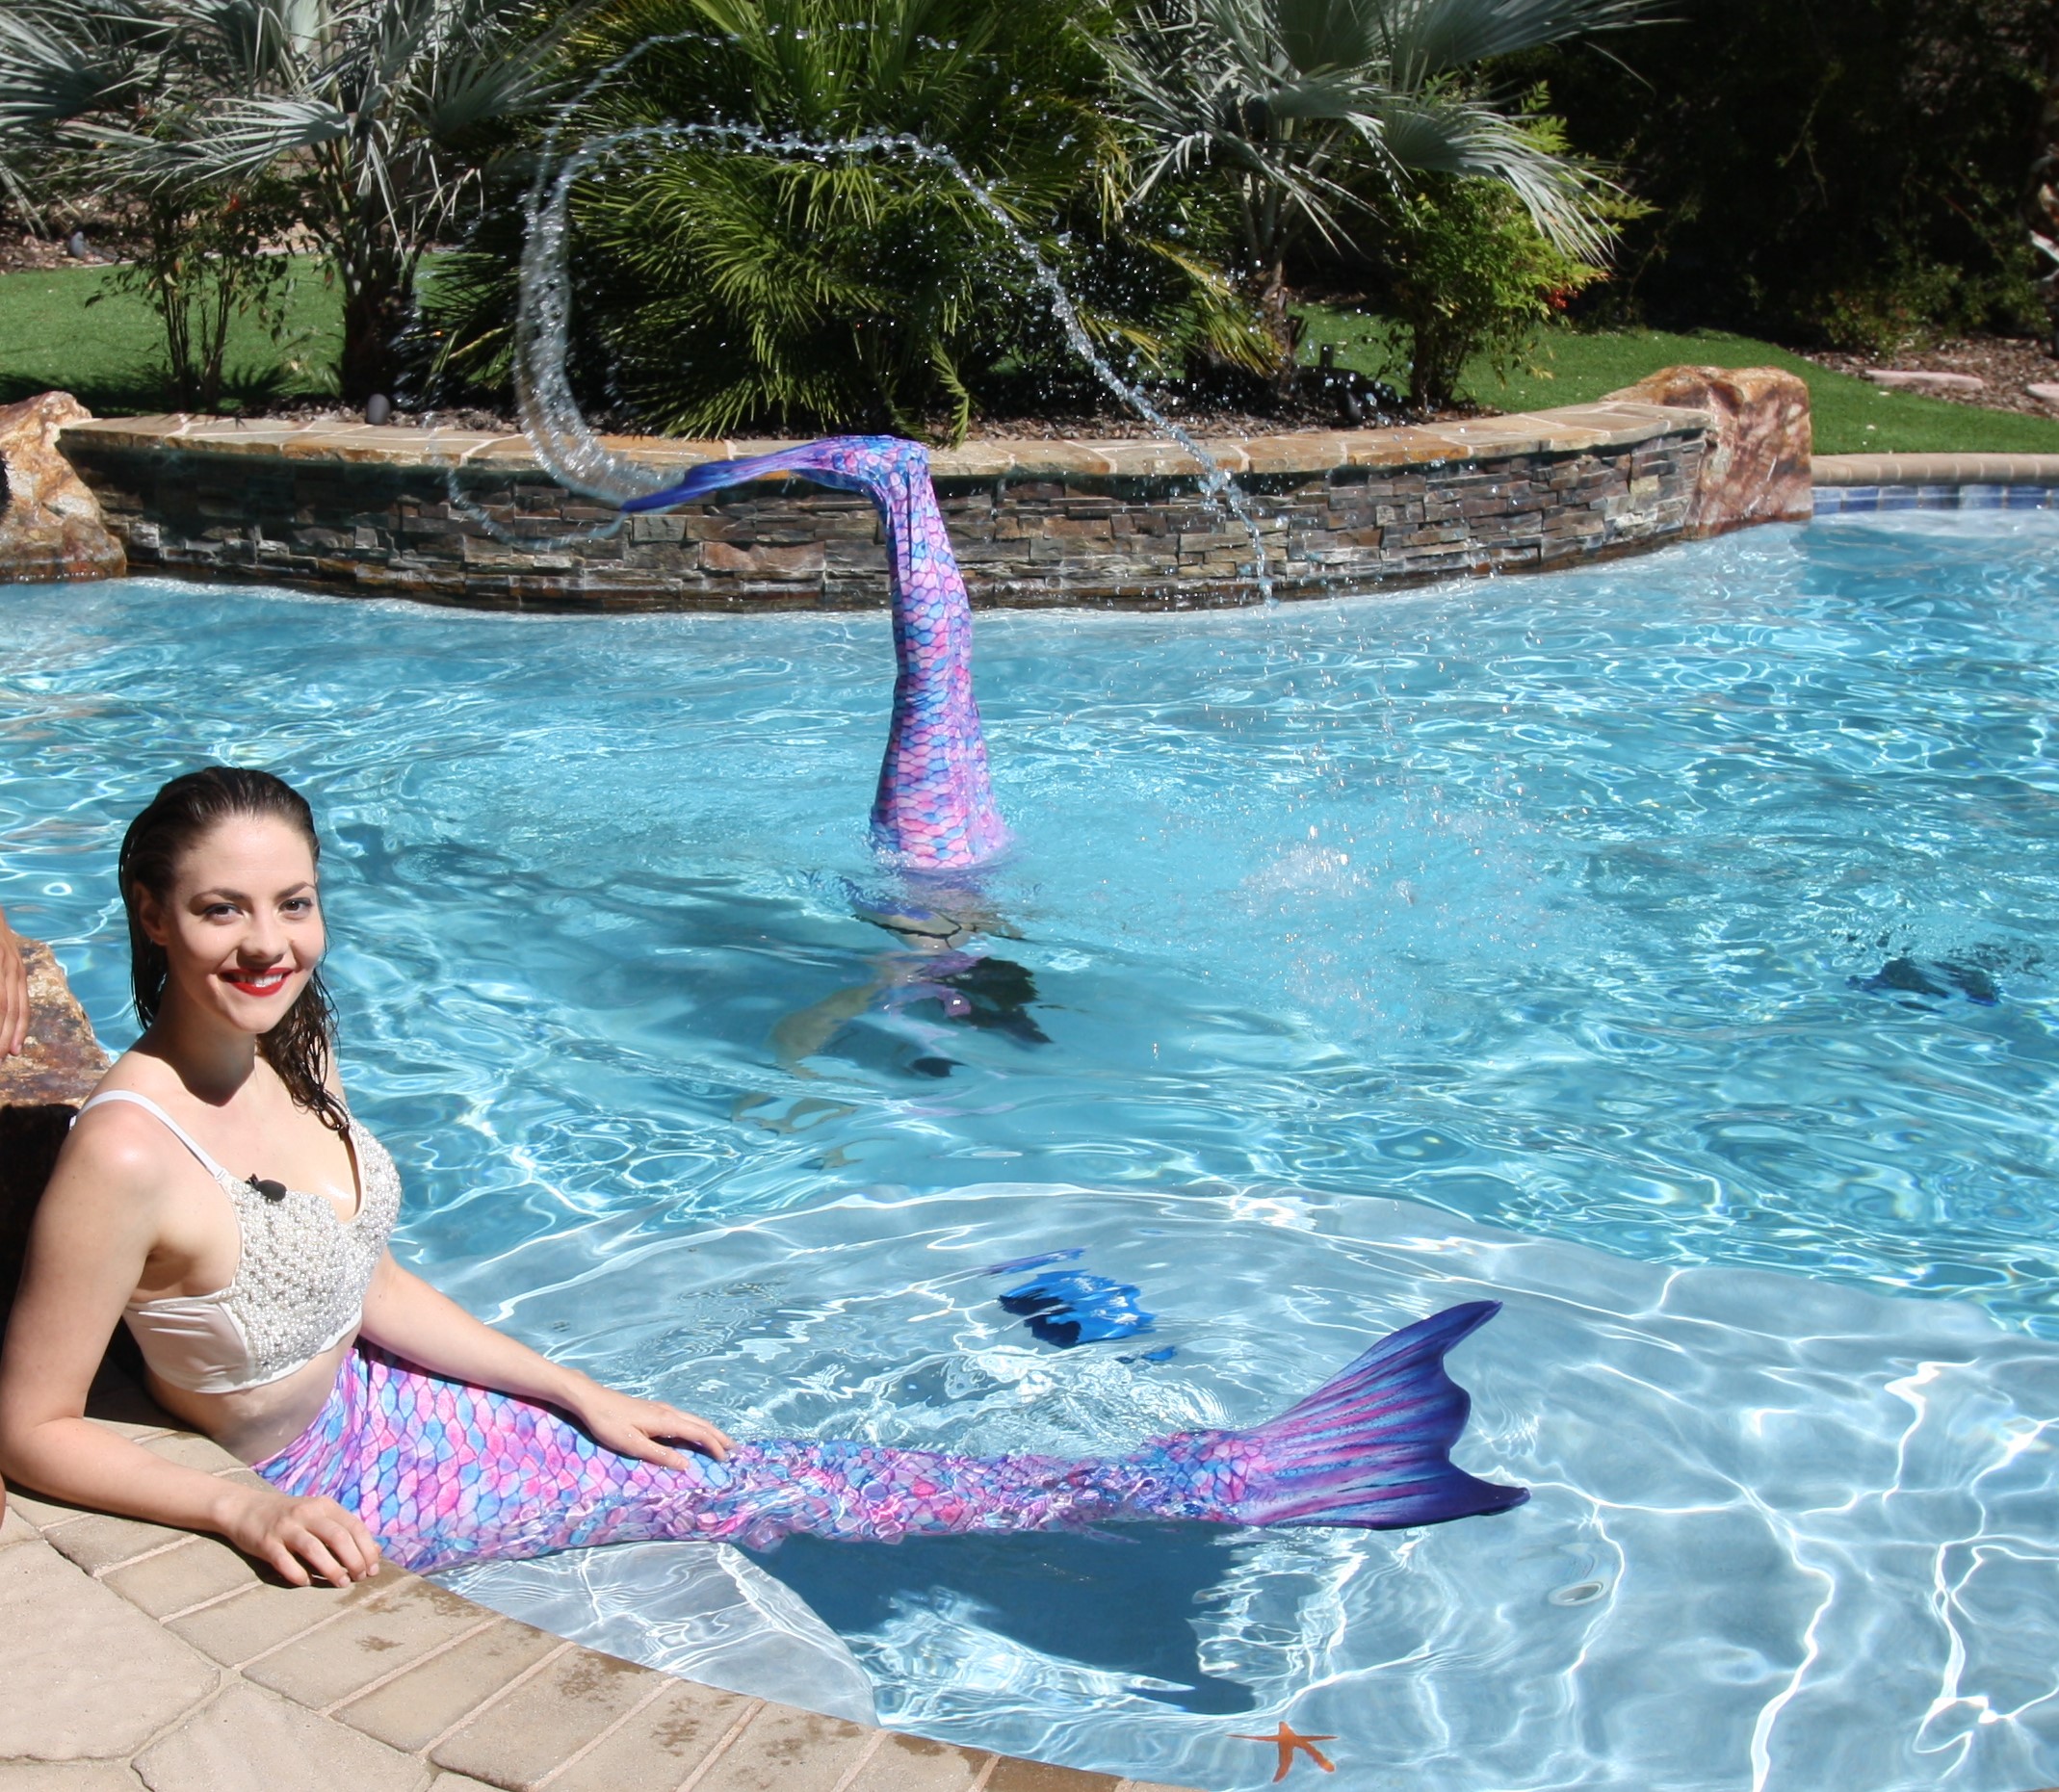 Anna Yatsko a Professional Mermaid and Aquatic Performer.